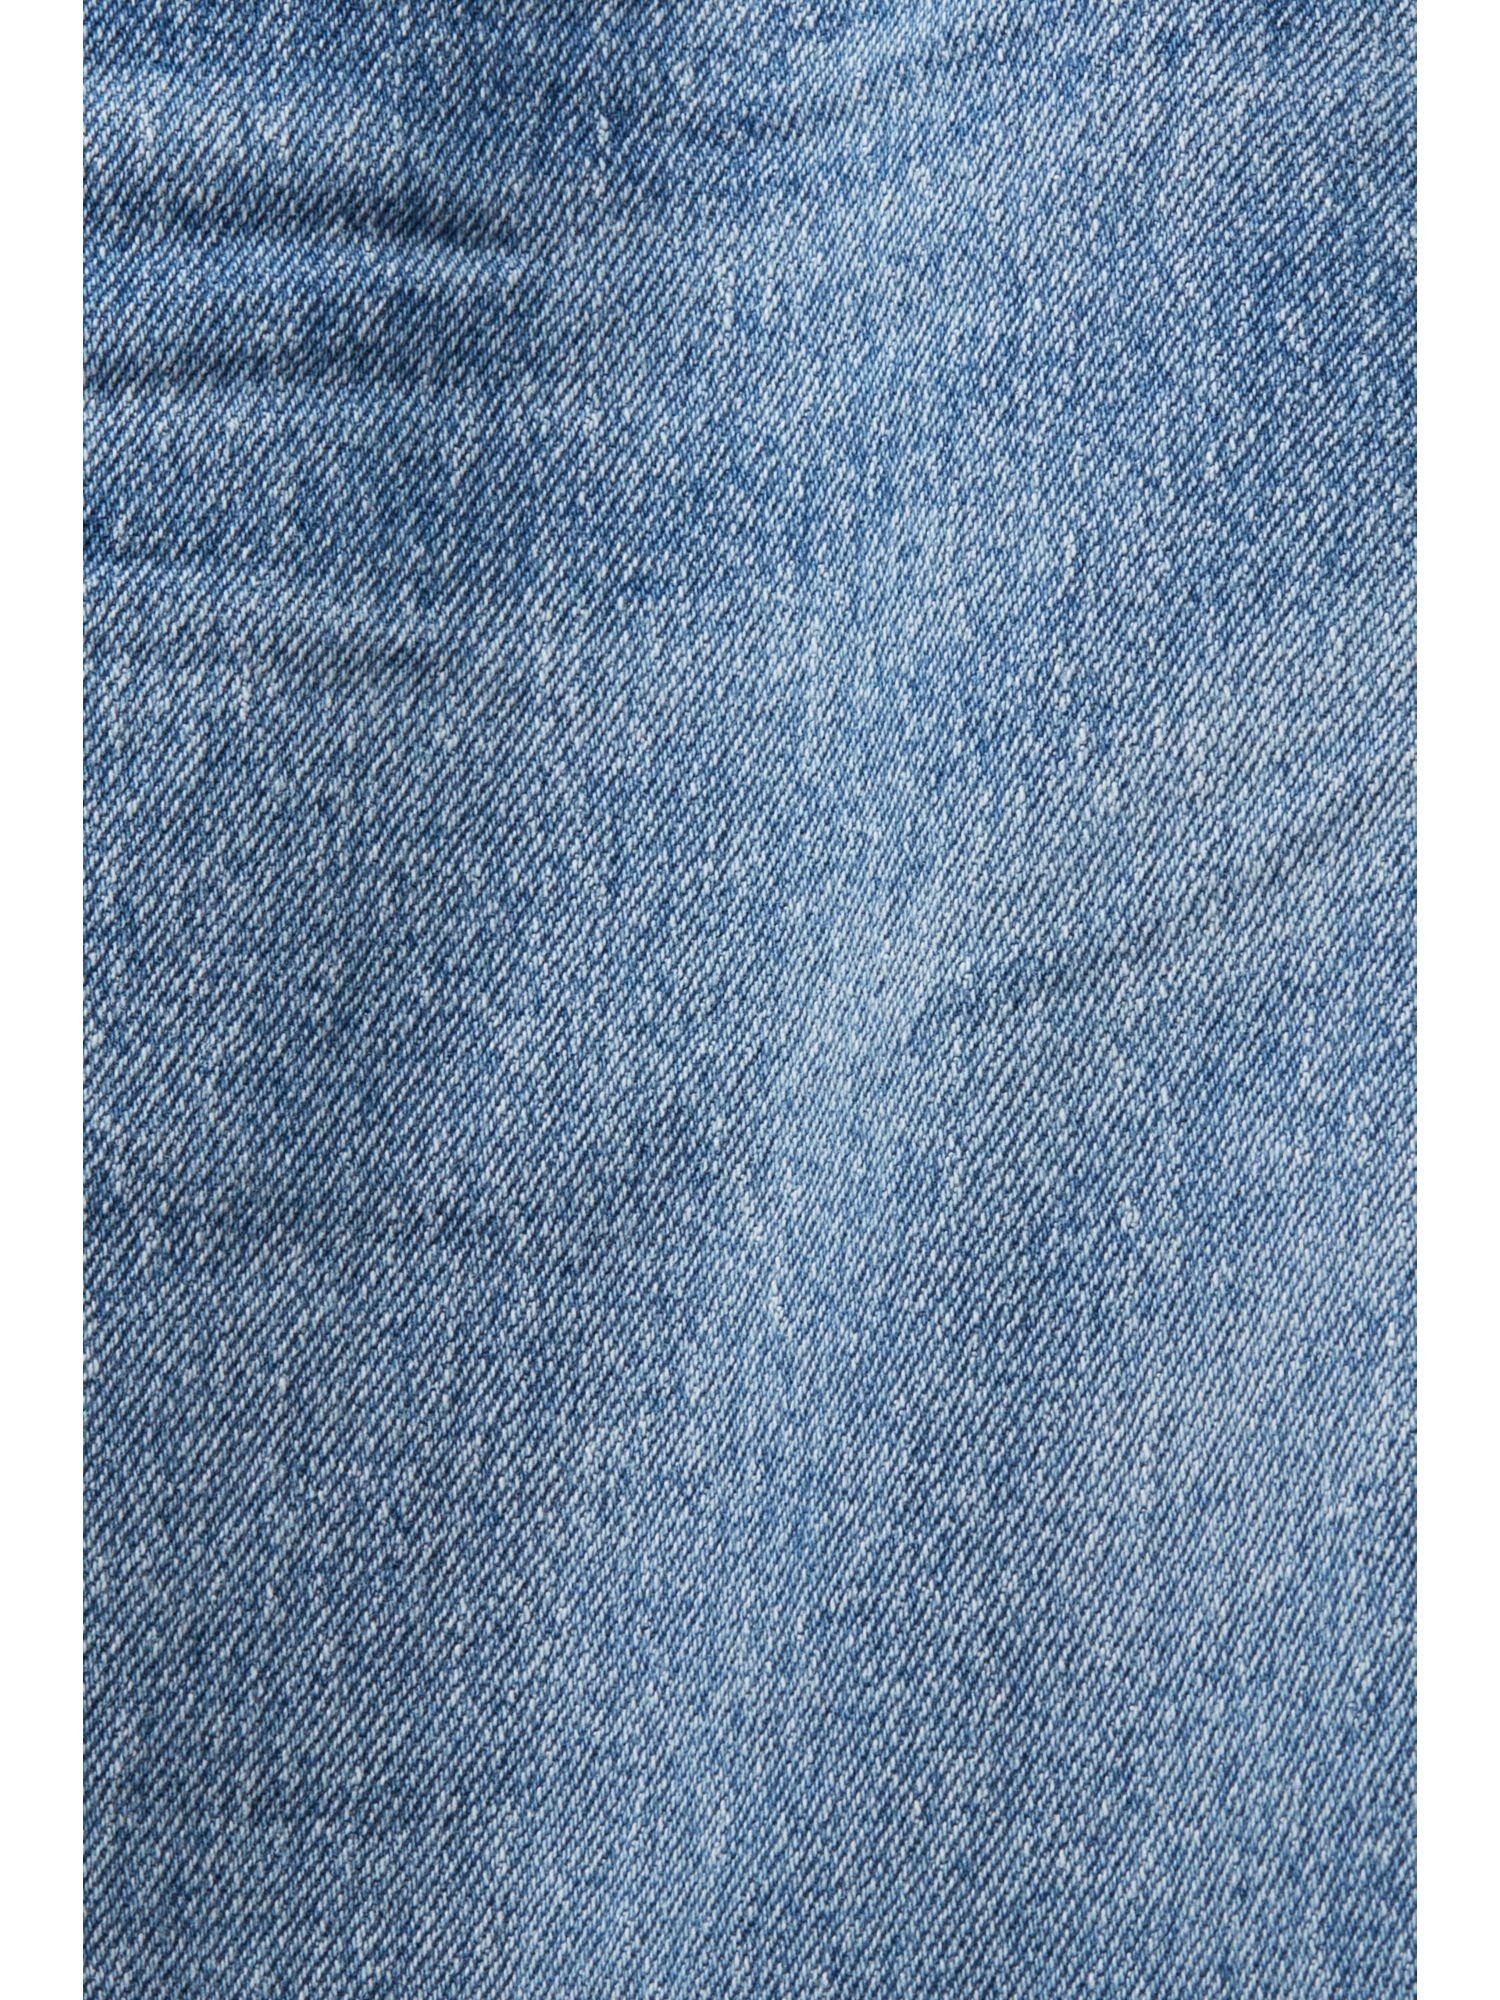 Esprit WASHED Jeansshorts edc by Jeans-Bermudashorts MEDIUM BLUE